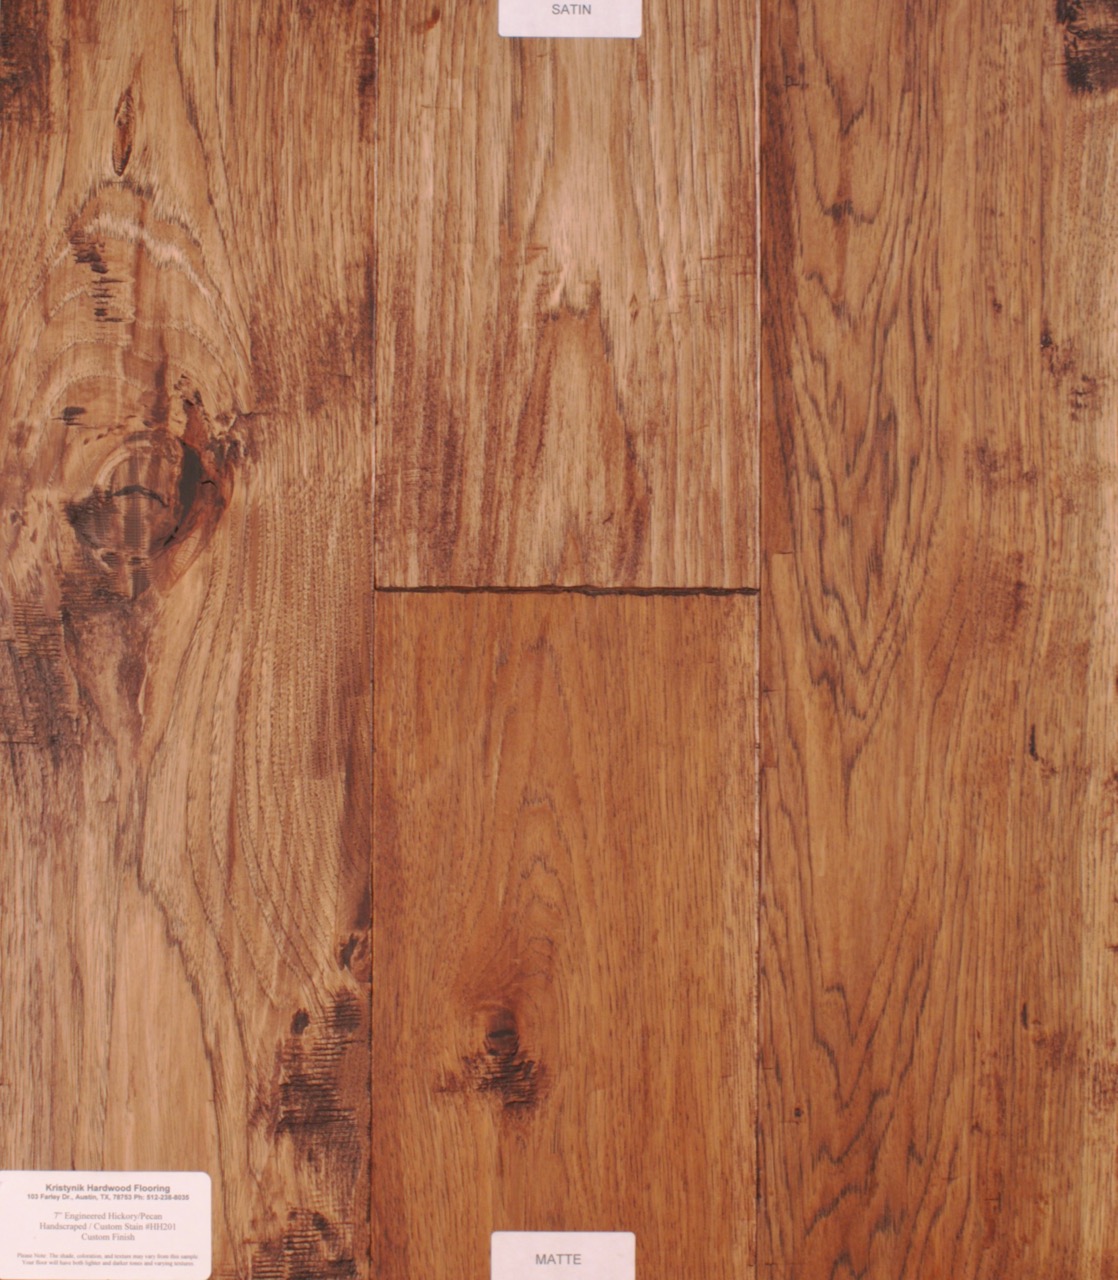 Sample Kristynik Hardwood Flooring Austin Texas